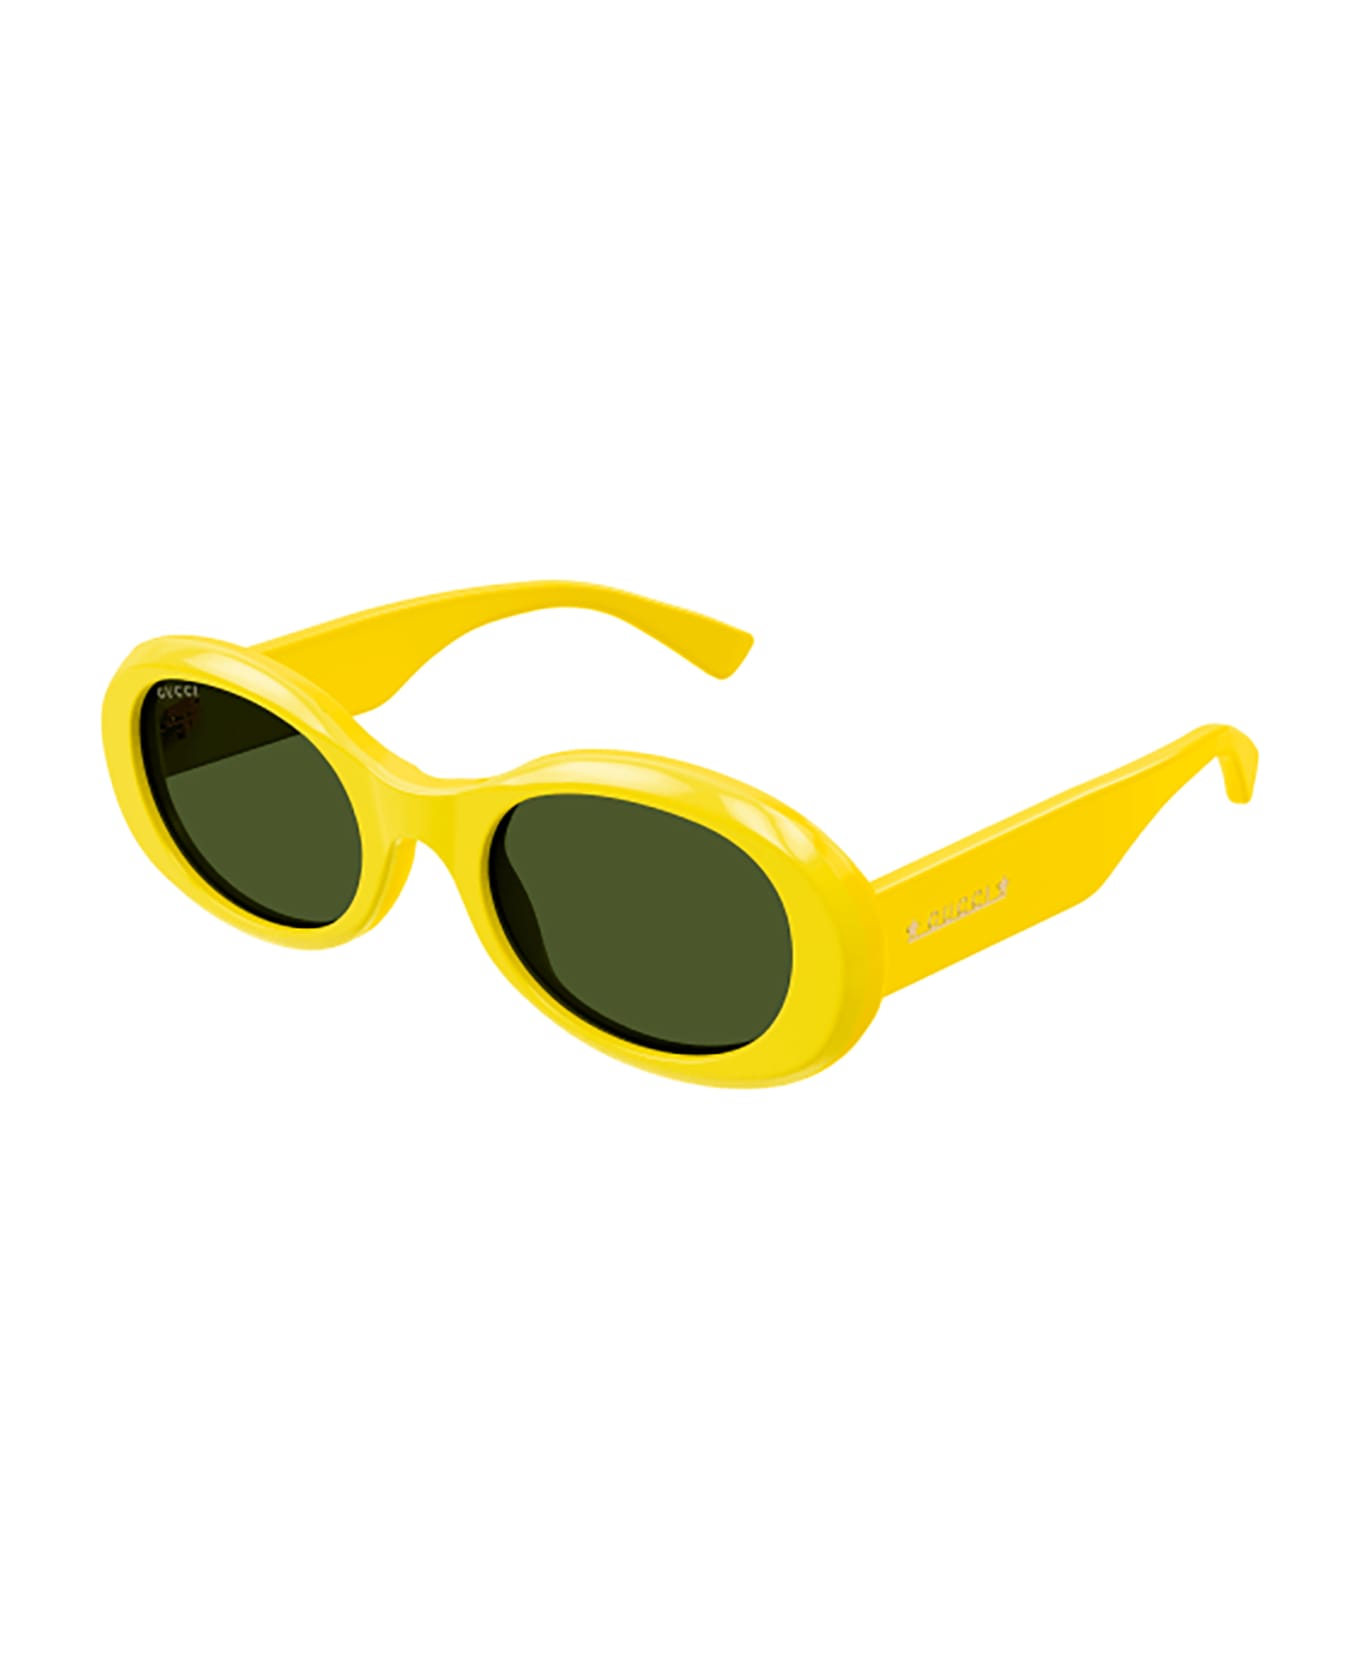 Gucci Eyewear GG1587S Sunglasses - Yellow Yellow Green